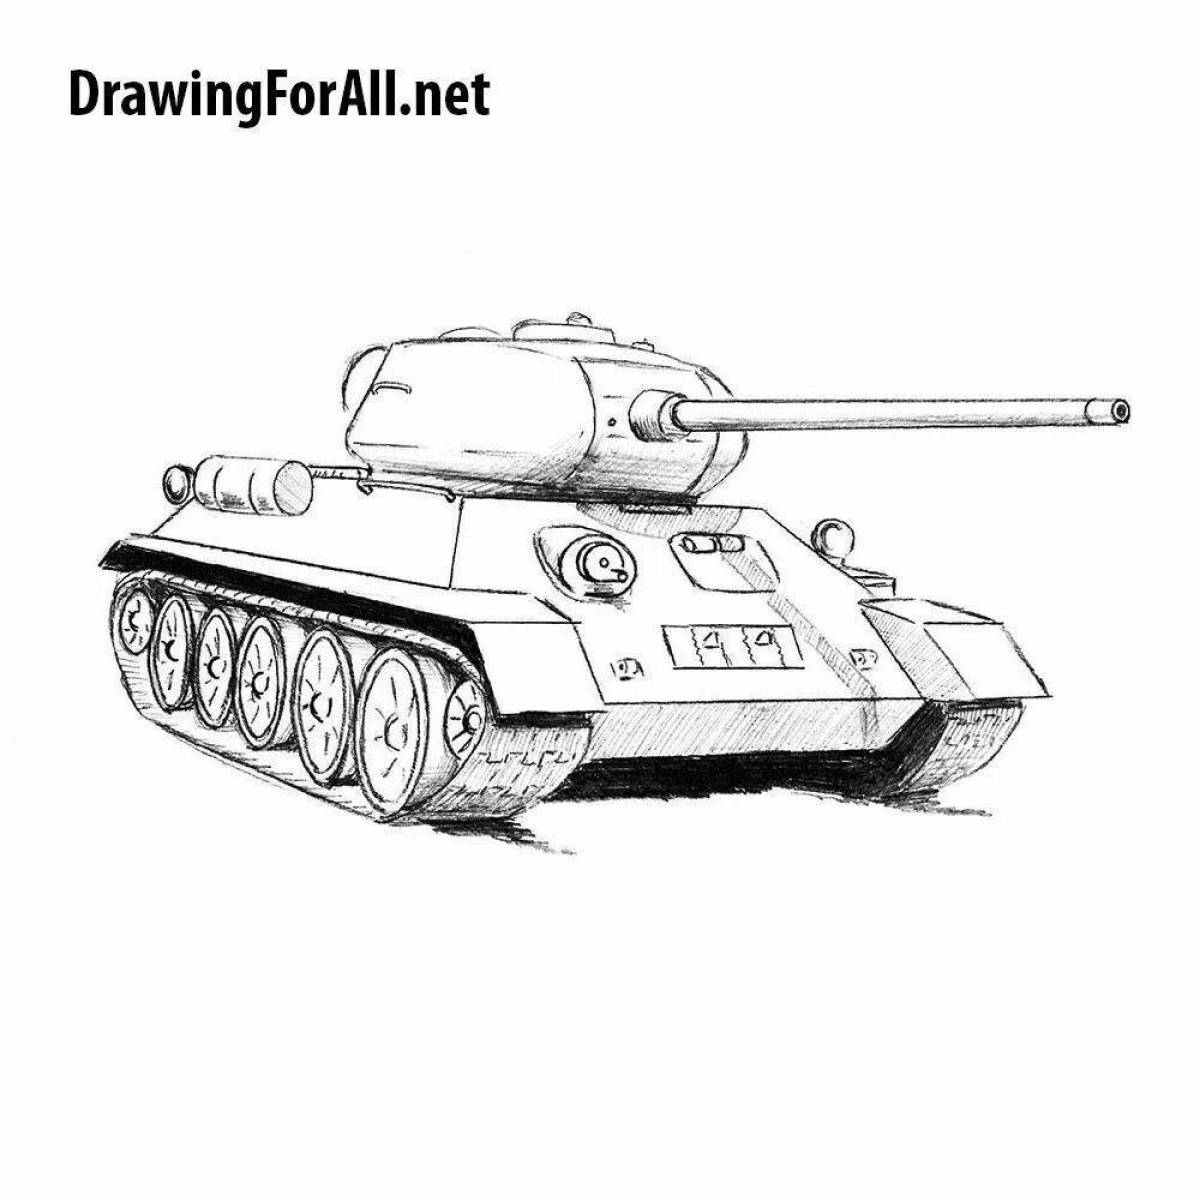 Sparkling t-34 85 tank